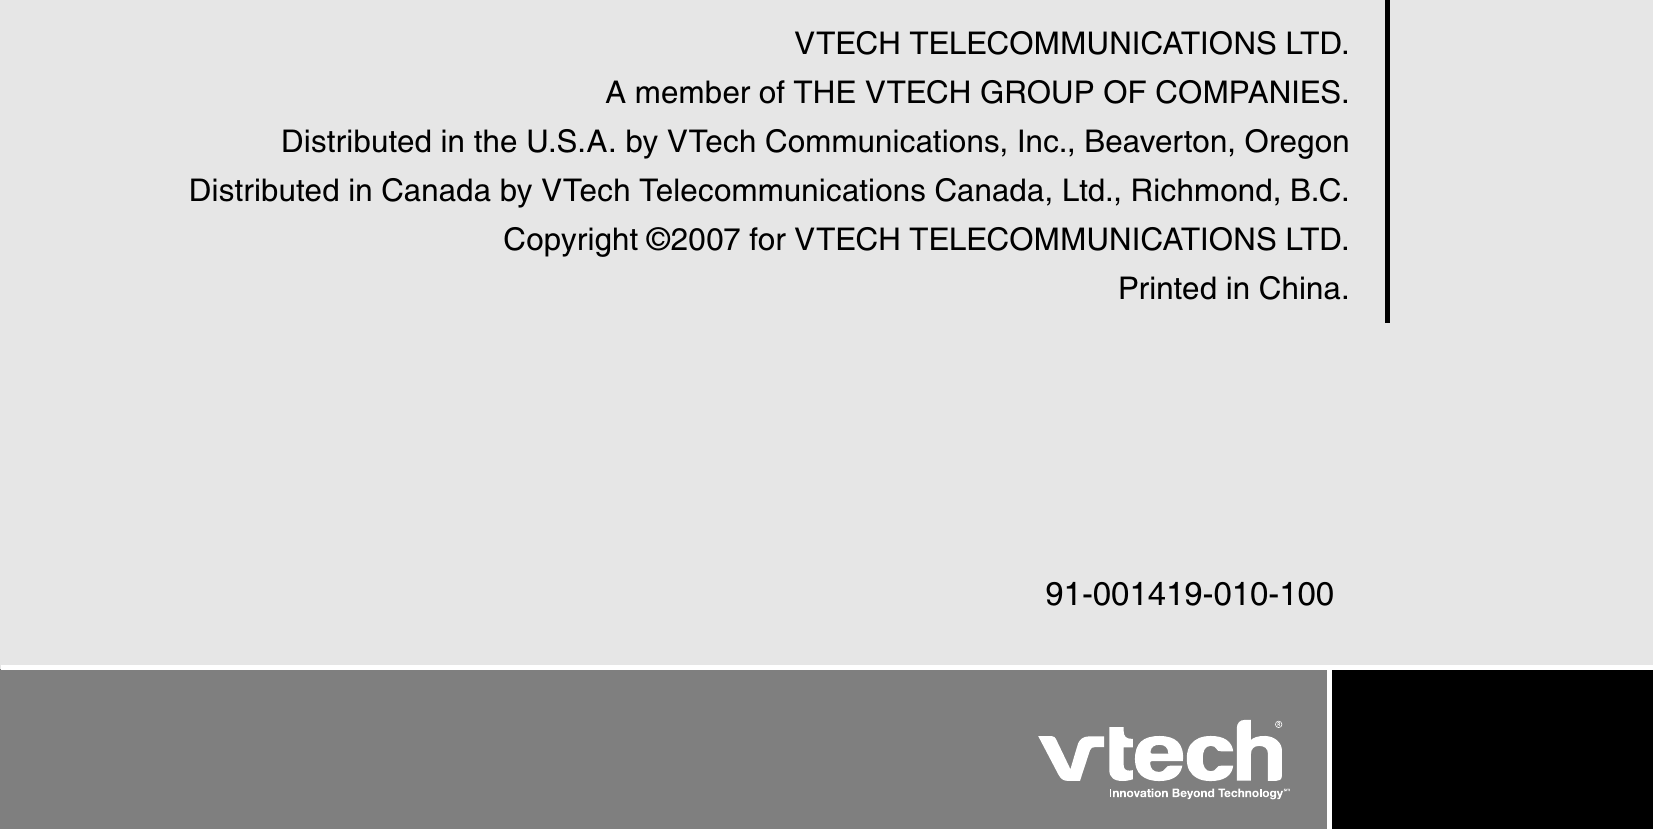 VTECH TELECOMMUNICATIONS LTD.A member of THE VTECH G ROUP OF COMPANIES.Distributed in the U.S.A. by VTech Communications, Inc., Beaverton, OregonDistributed in Canada by VTech Telecommunications Canada, Ltd., Richmond, B.C.Copyright © 2007 for VTECH TELECOMMUNICATIONS LTD.Printed in China.91-001419-010-100